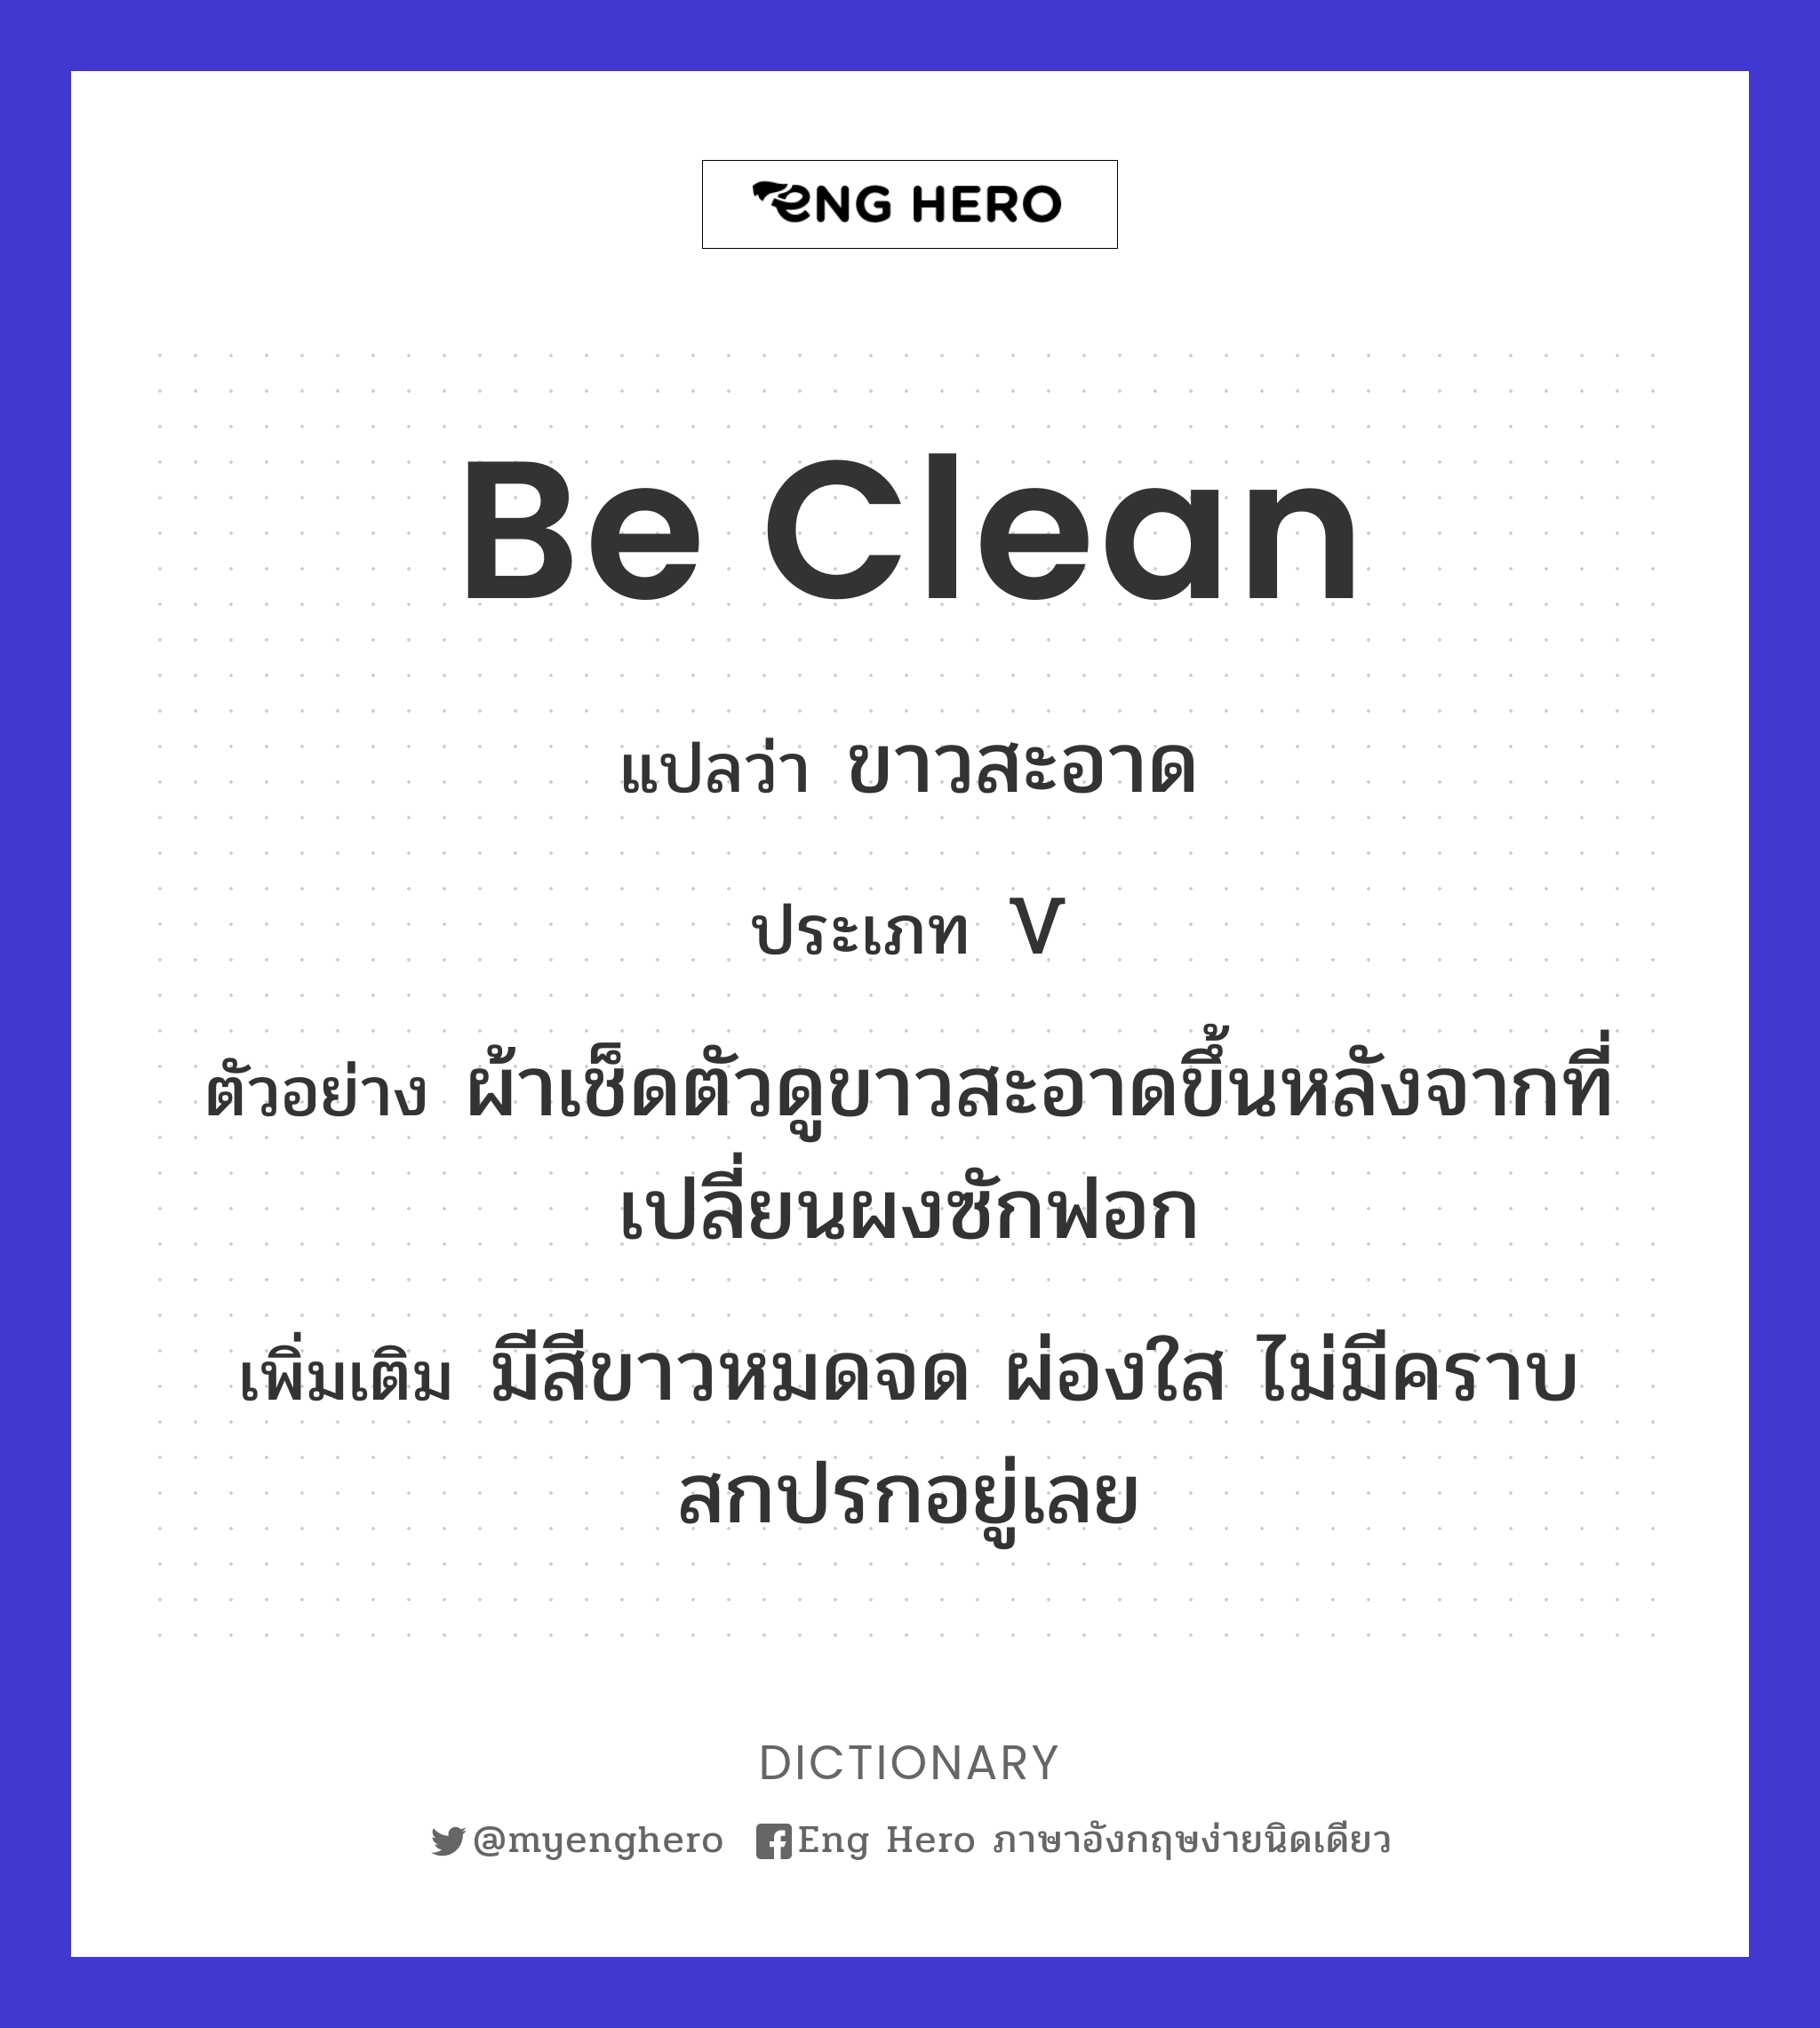 be clean